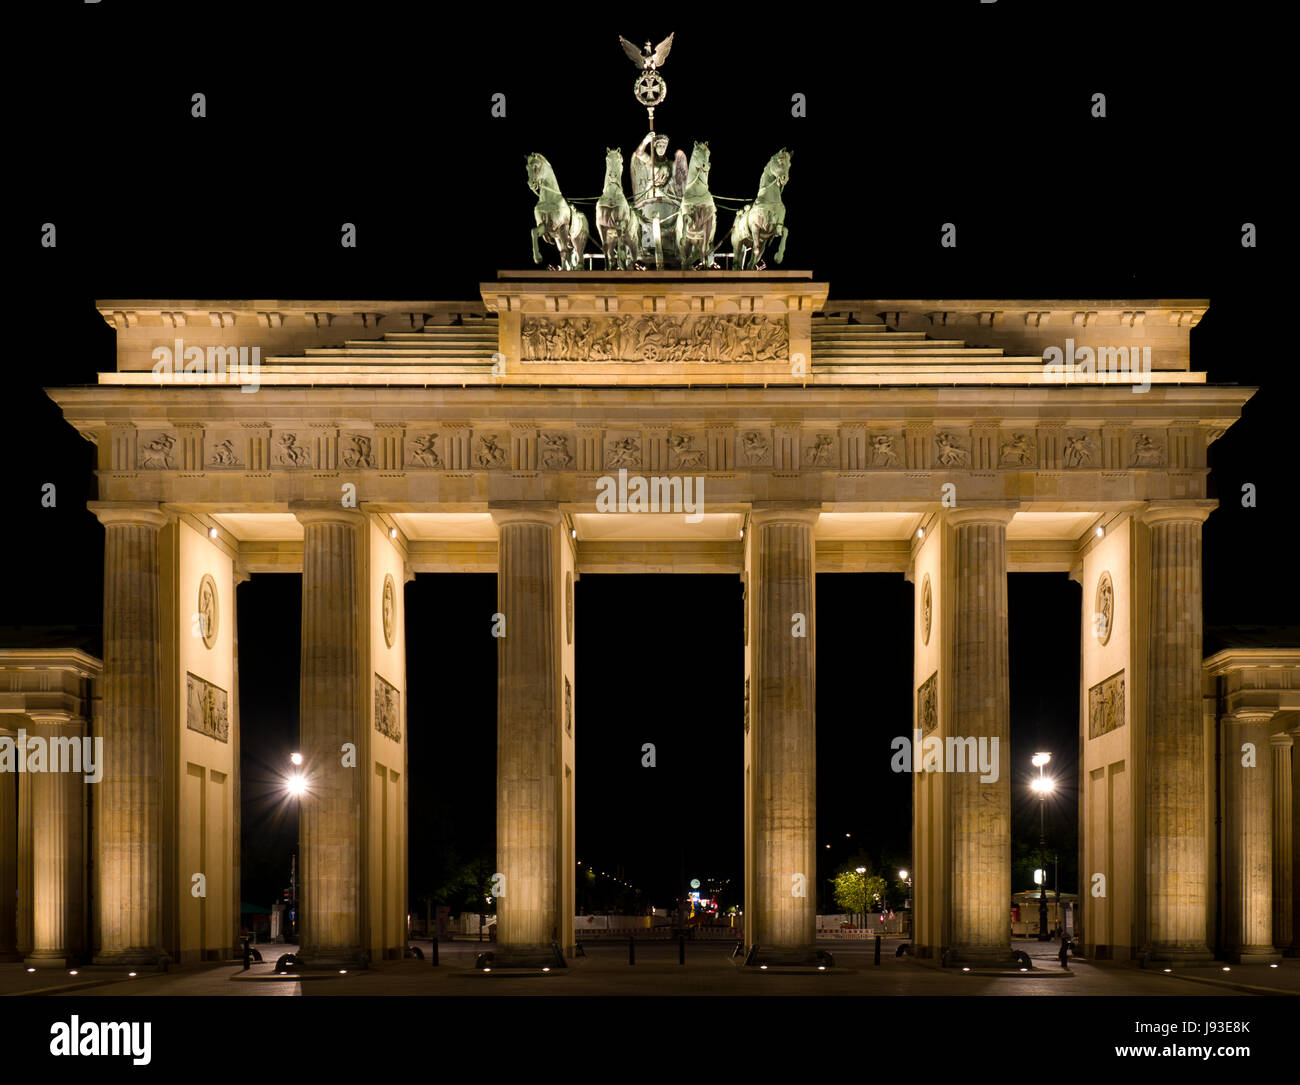 Nacht, Nacht, Tor, Durchgang, Tor, Archgway, Gantry, Brandenburg, Berlin, Stockfoto